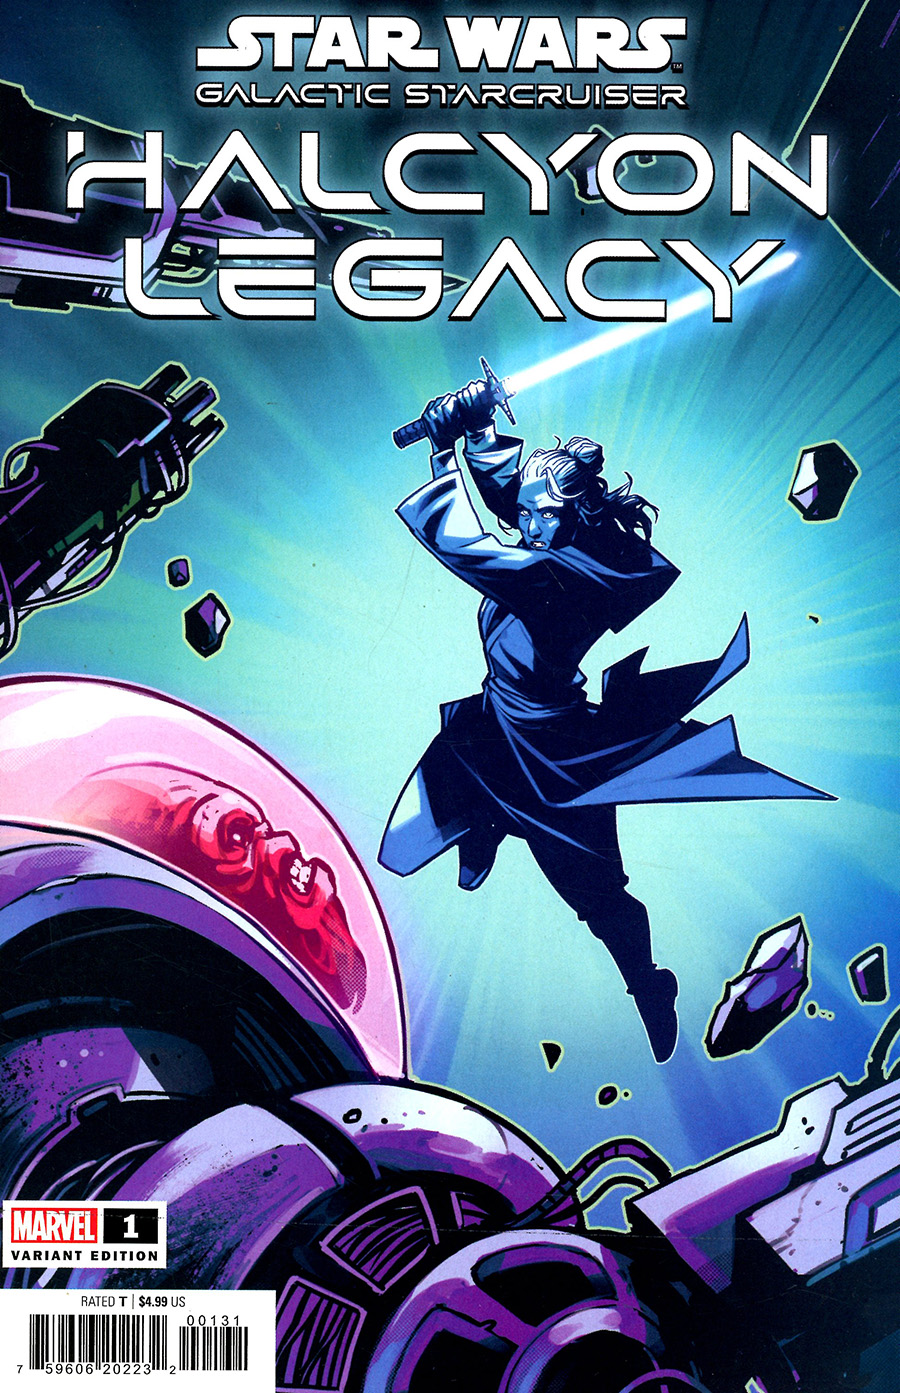 Galactic Starcruiser: Halcyon Legacy #1 (Caspar Wijngaard Variant Cover) (02.02.2022)